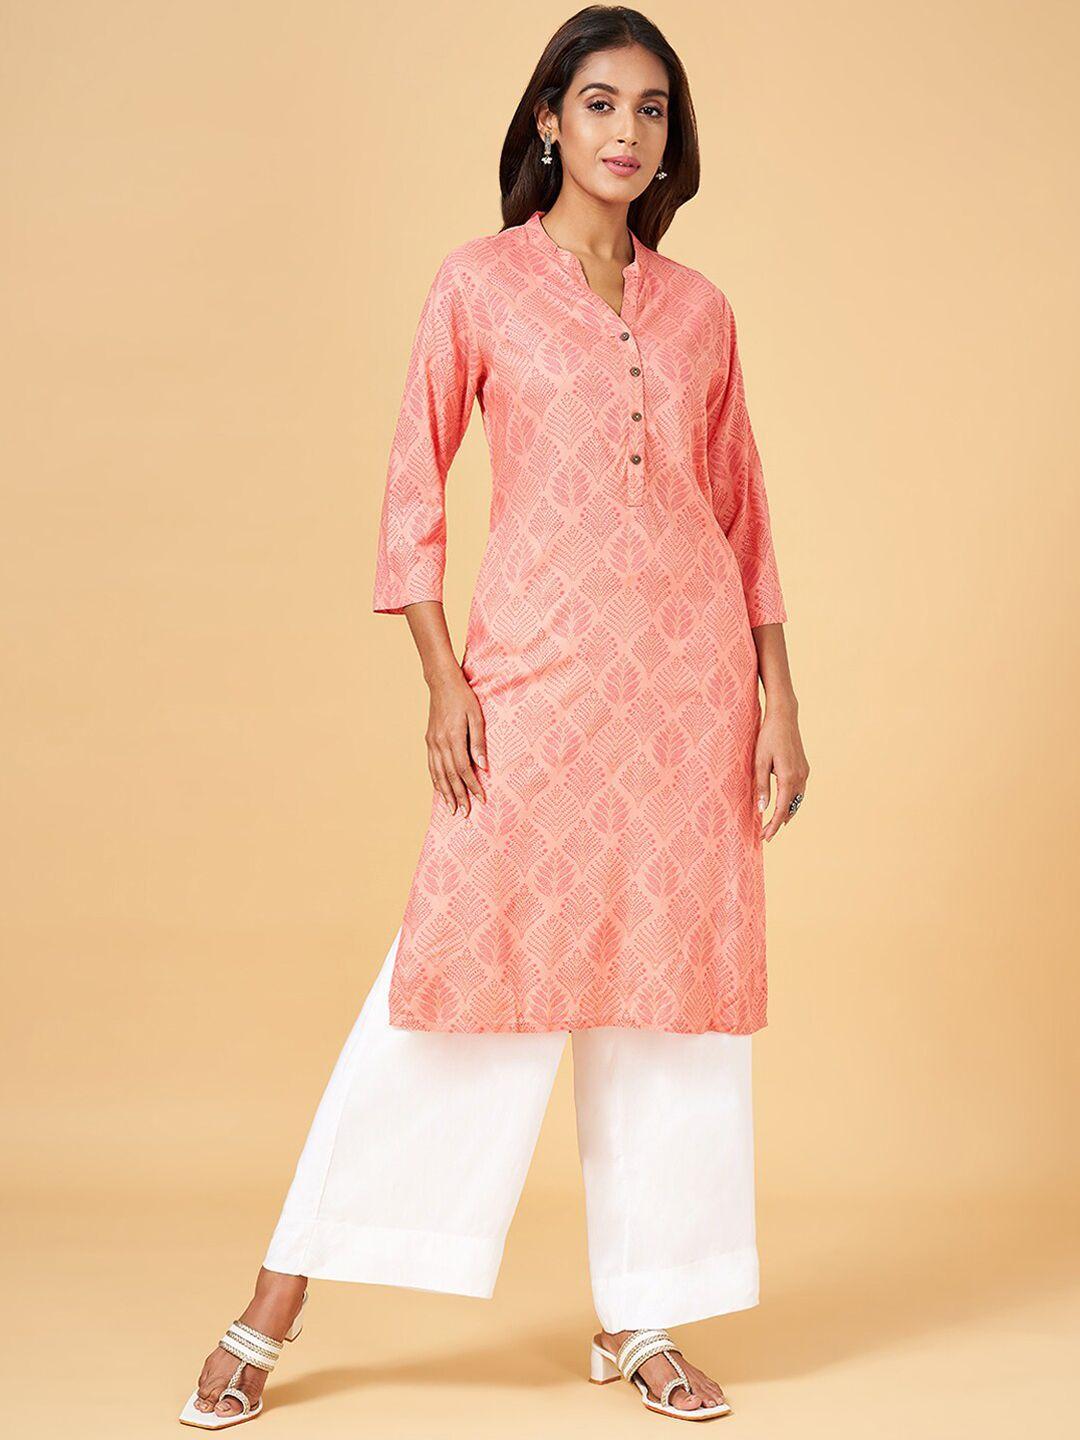 rangmanch by pantaloons floral printed mandarin collar kurta